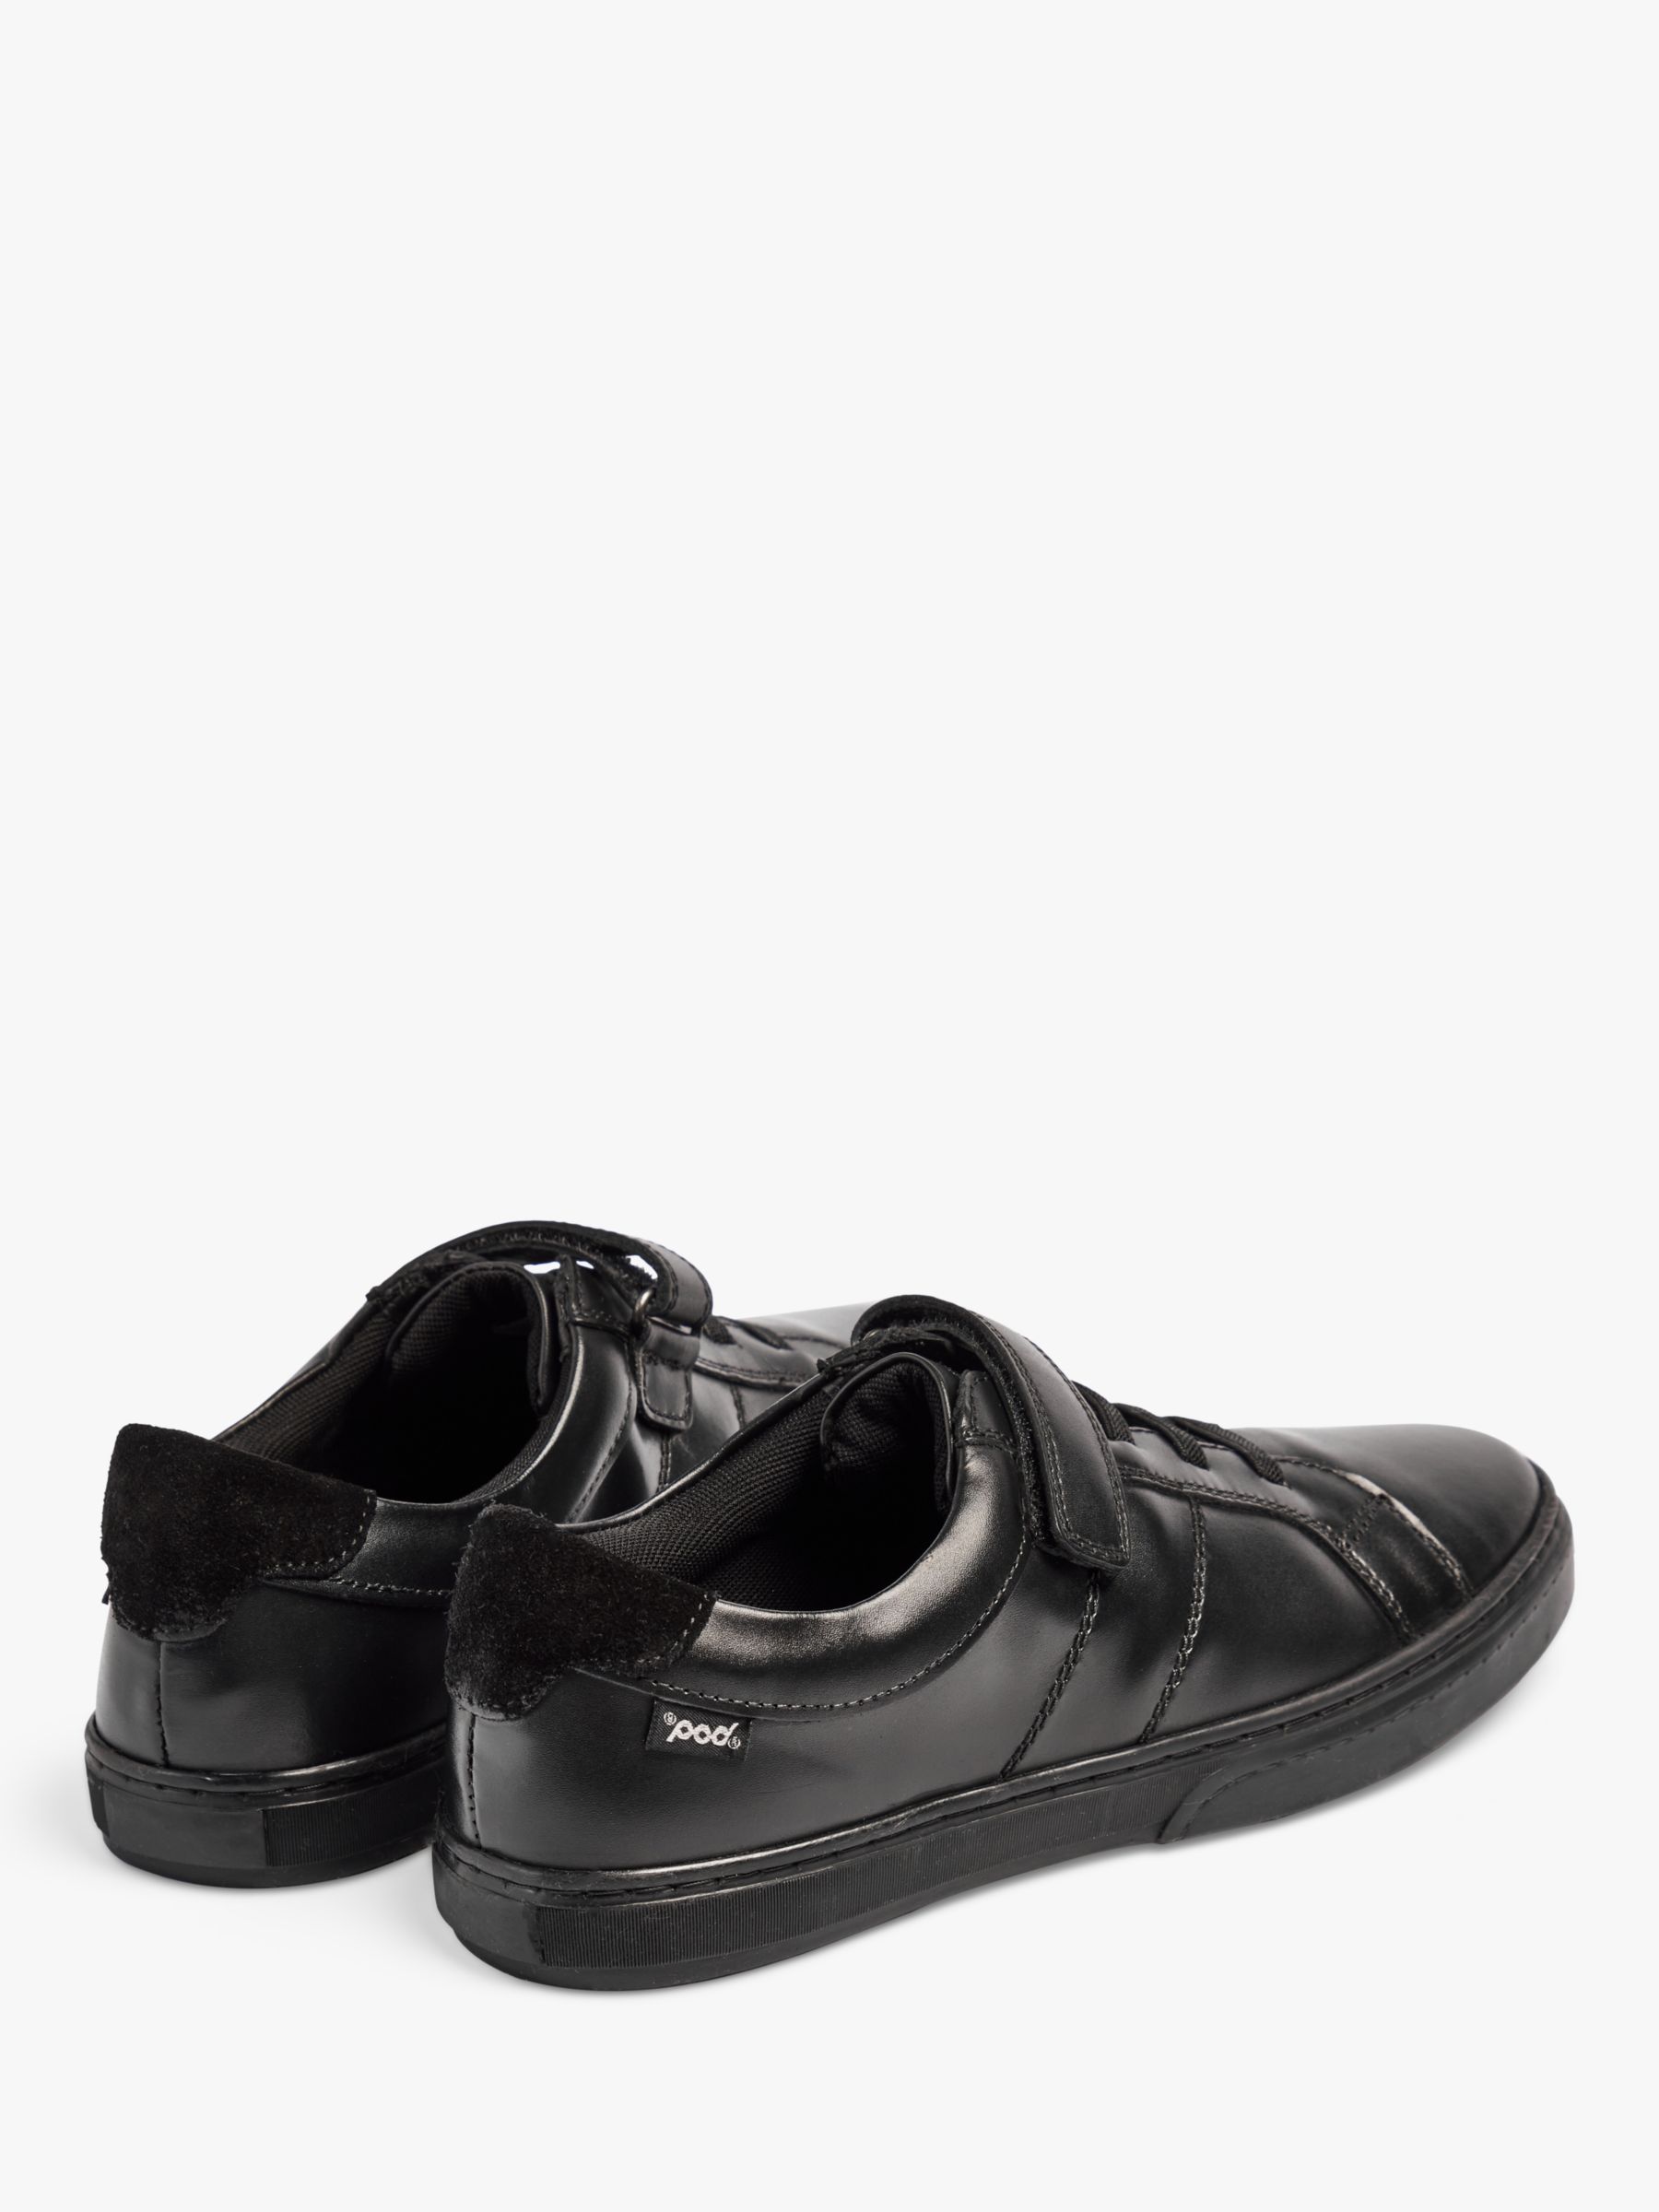 Buy Pod Kids' Krew Leather School Shoes, Black Online at johnlewis.com